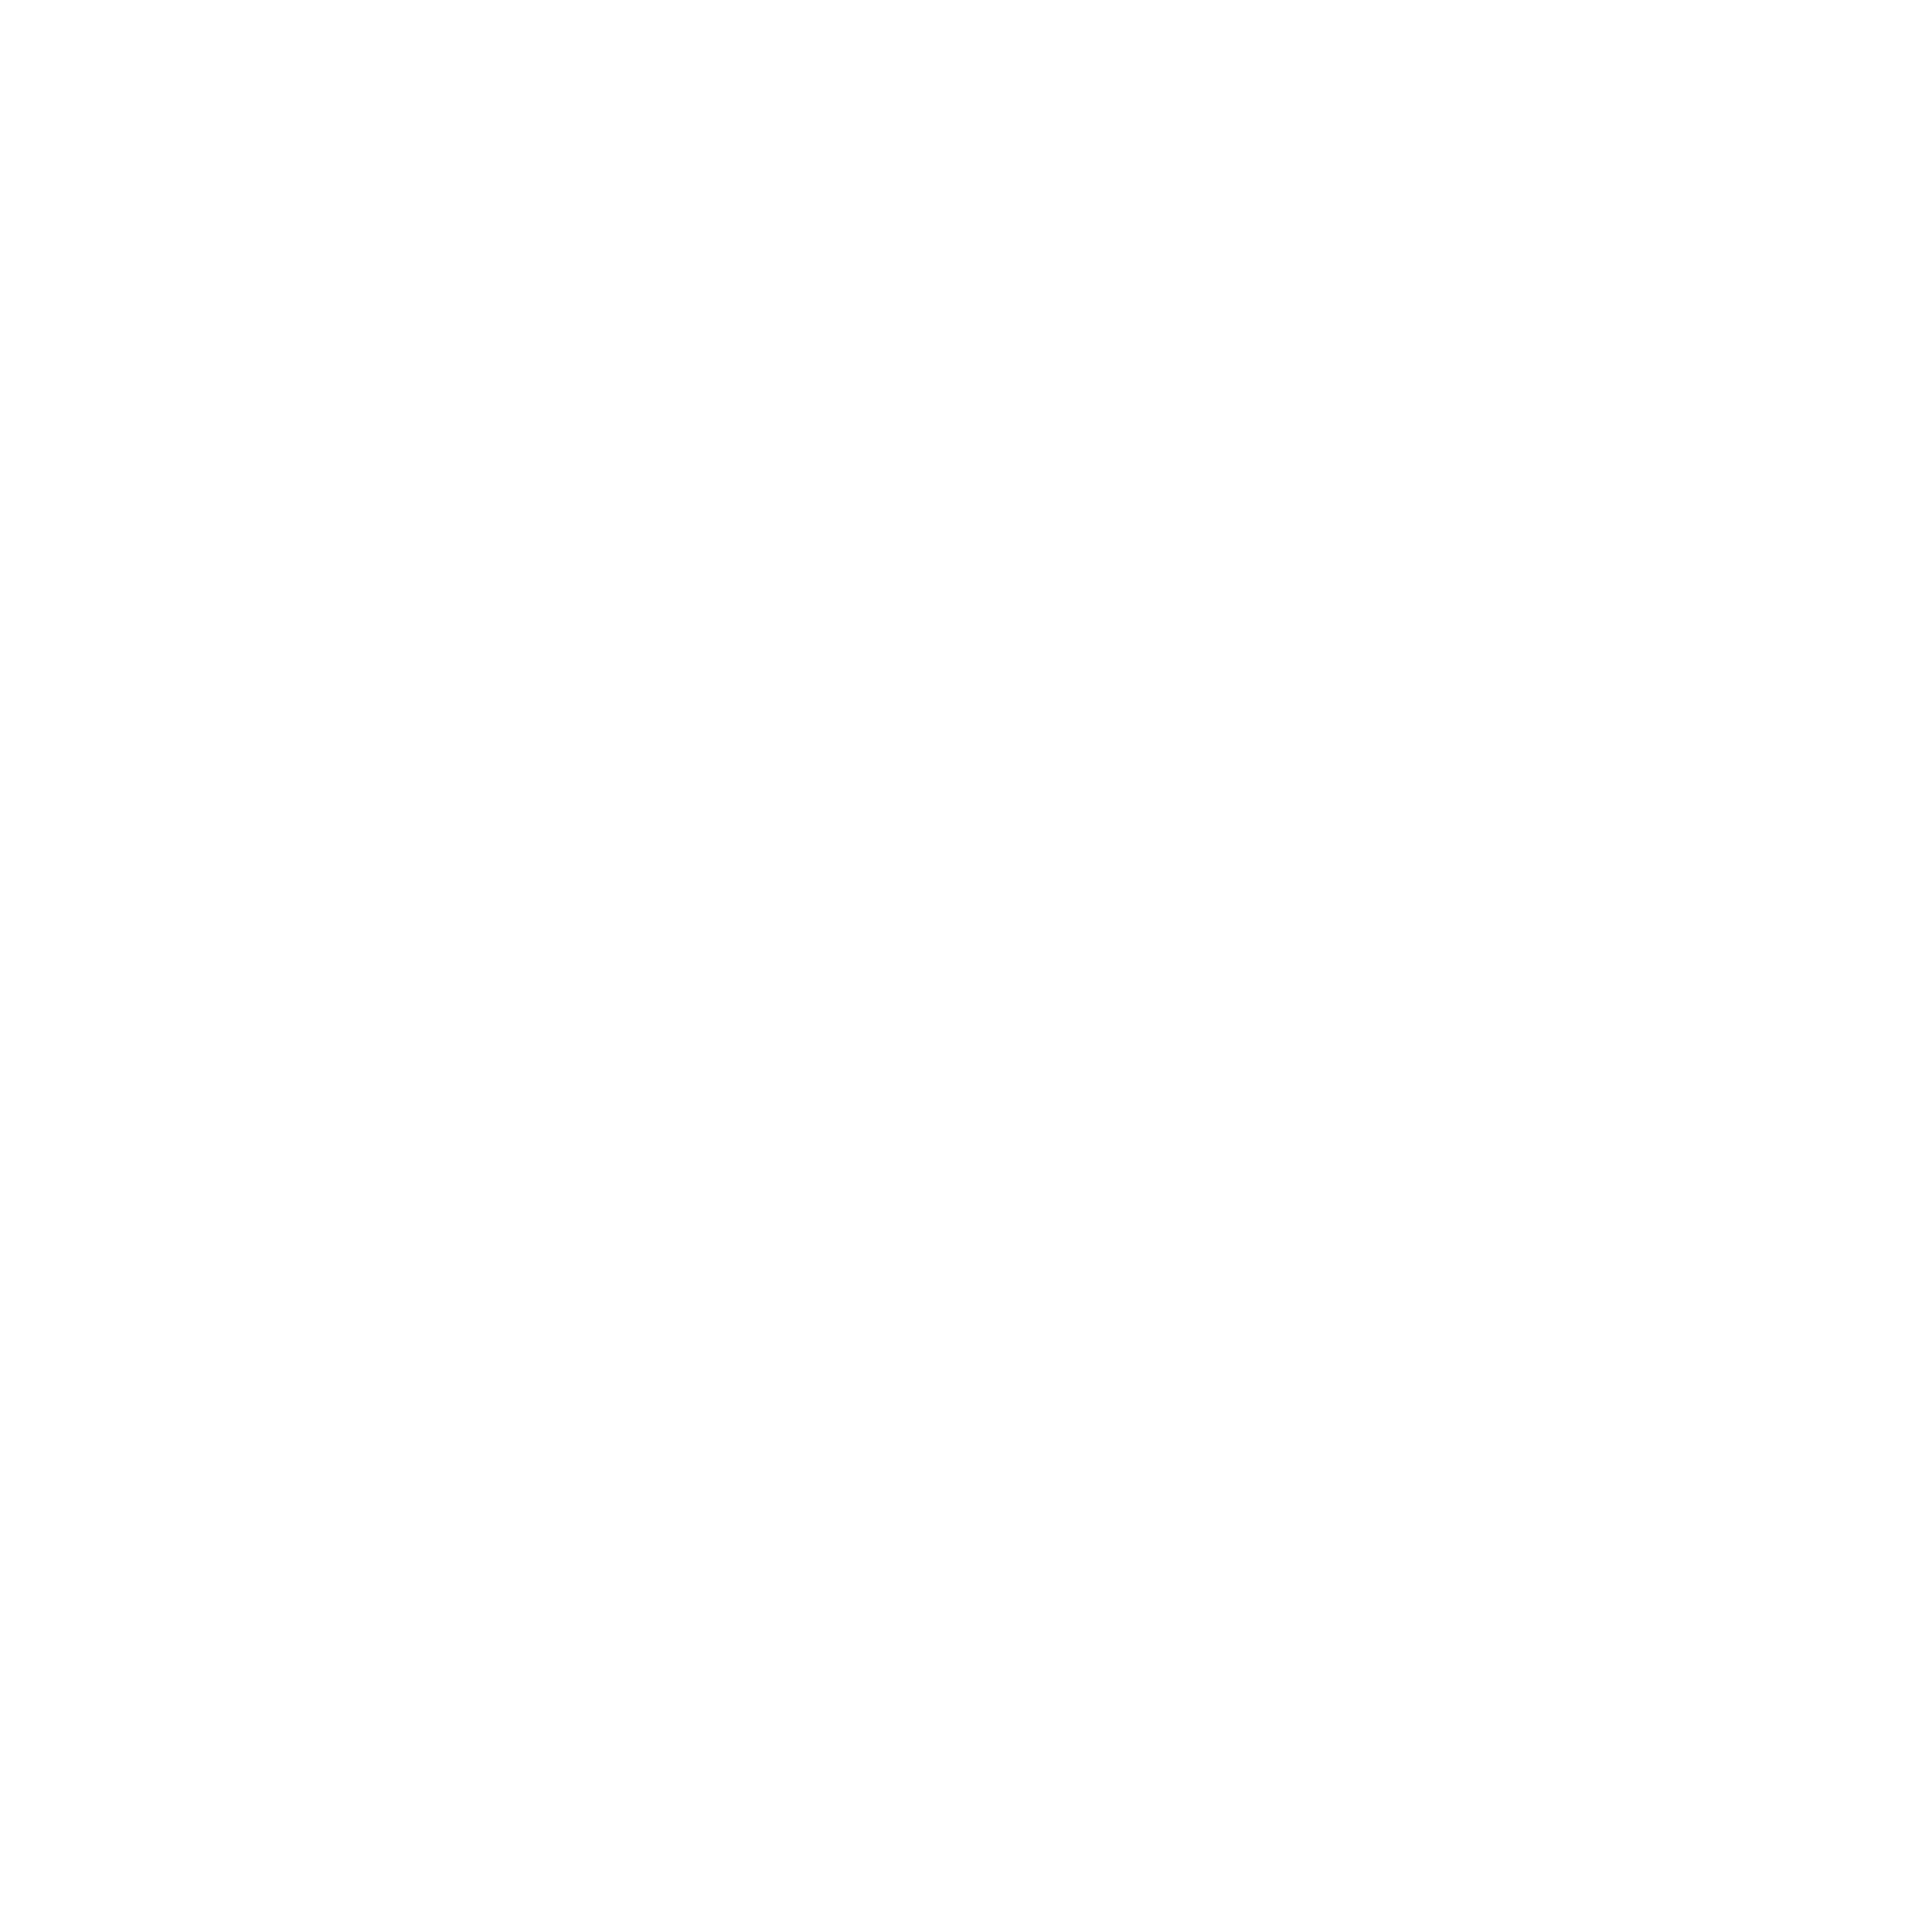 Burst Cryptocurrency icon